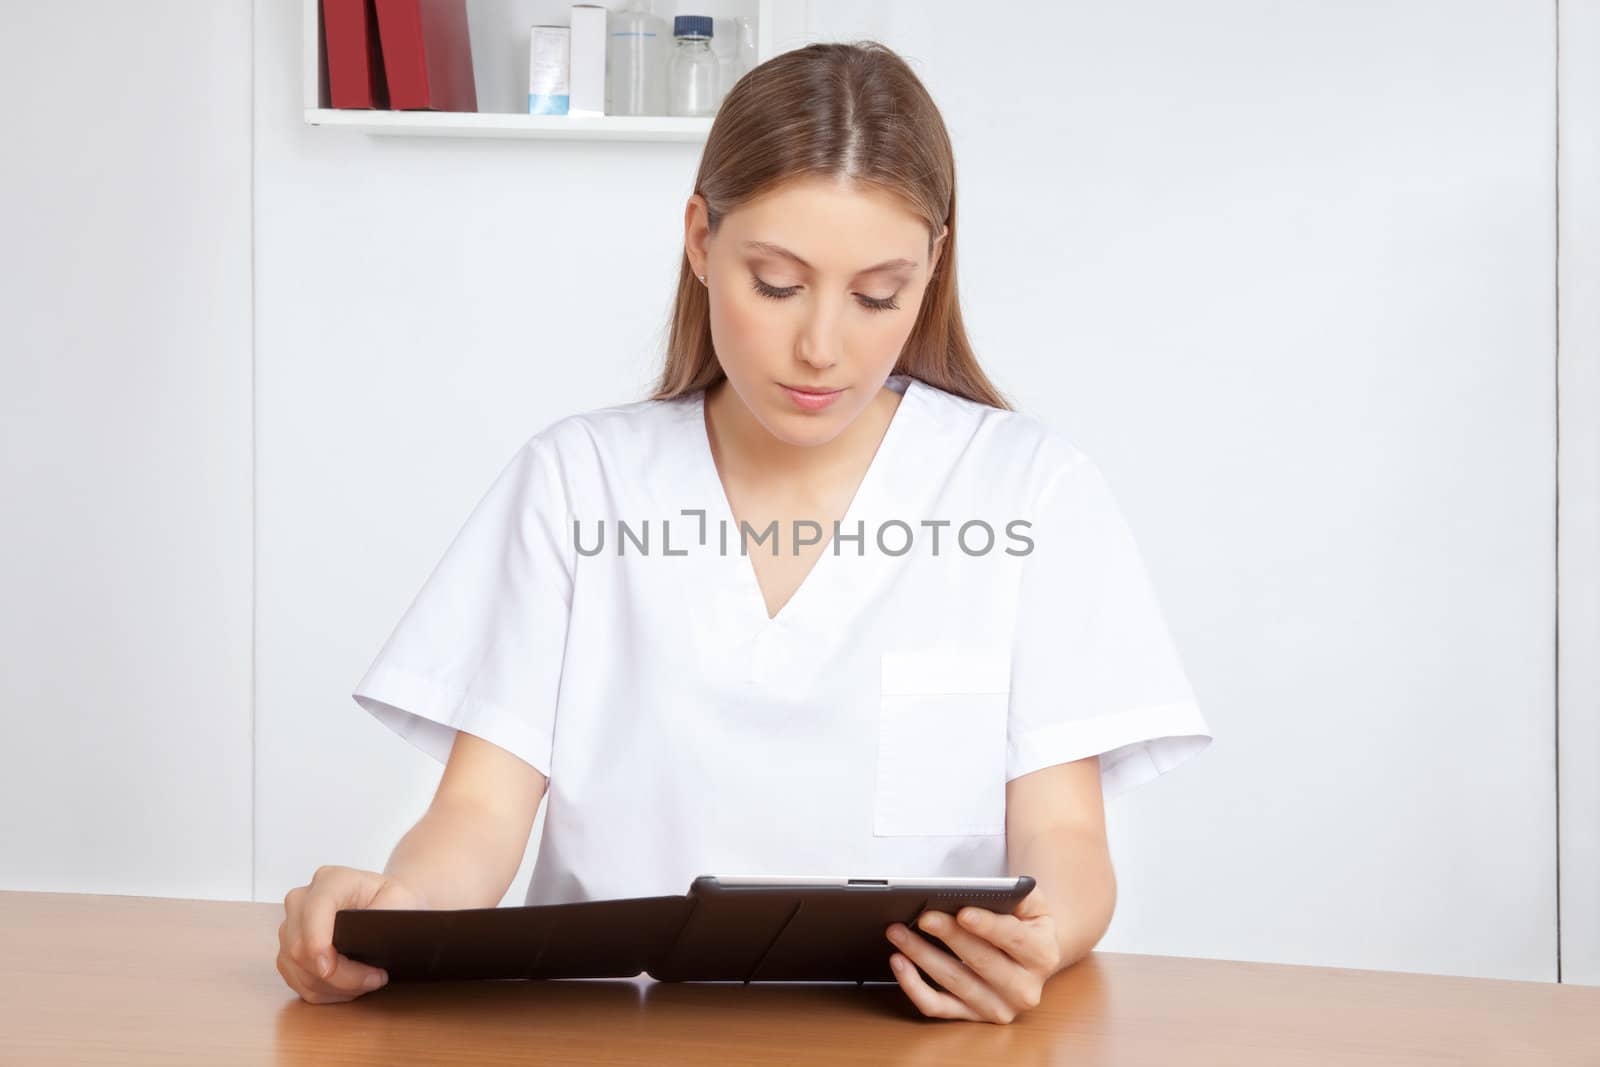 Medical professional using digital tablet.